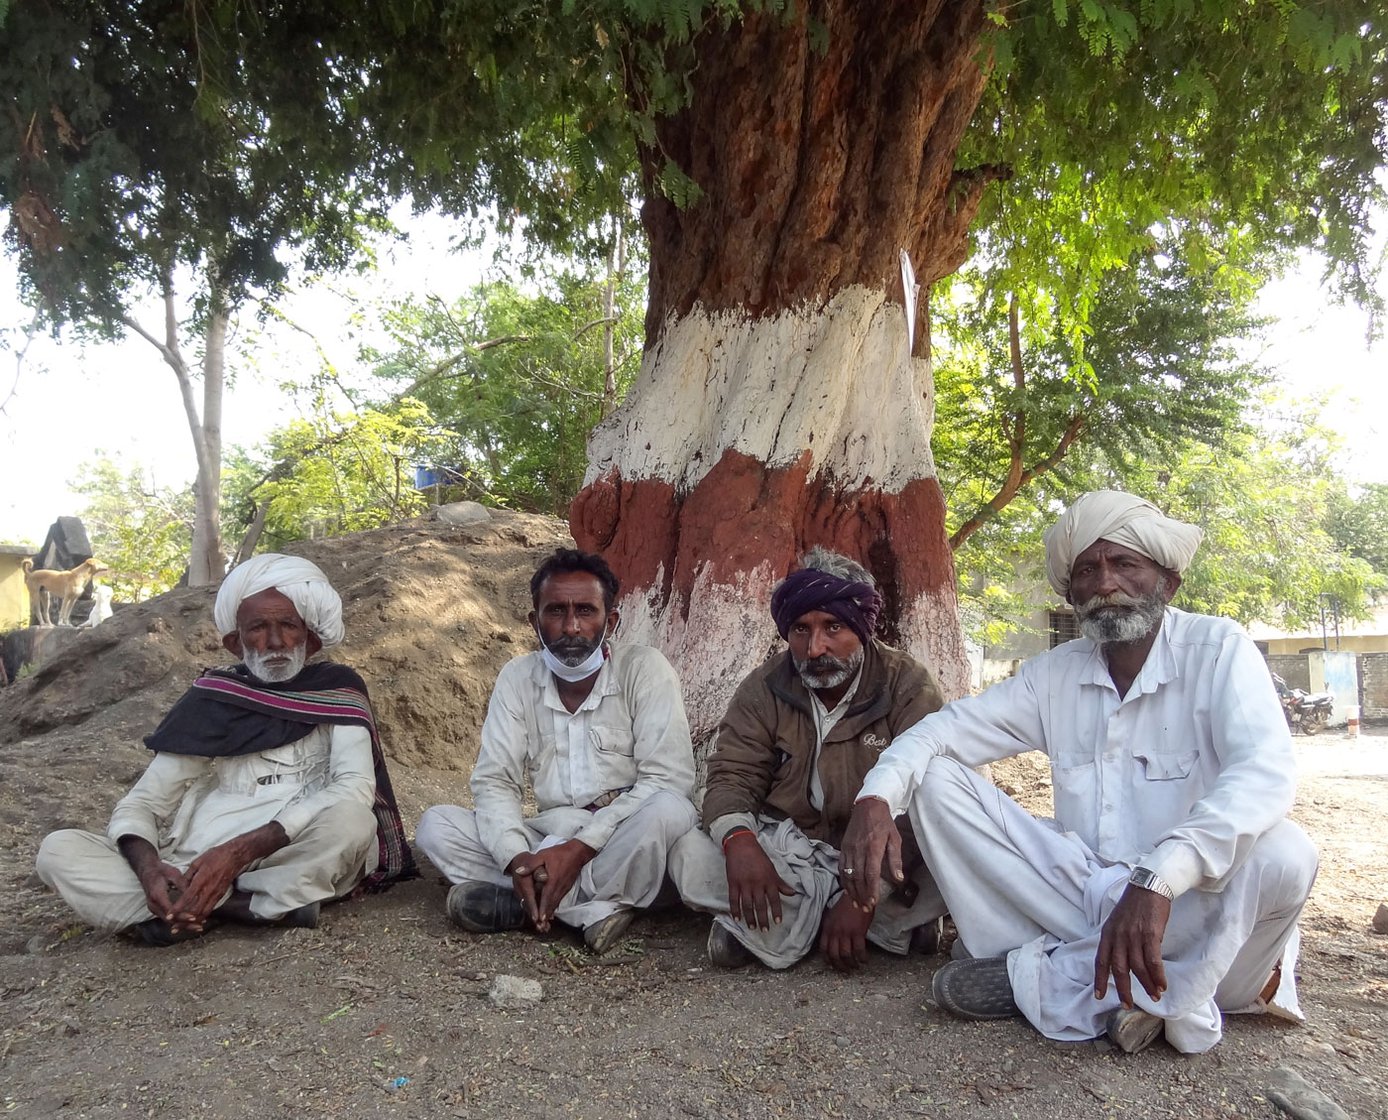 Four of the traditional herders from Kachchh – Versibhai Rana Rabari, Prabhu Rana Rabari, Visabhai Saravu Rabari and Jaga Hira Rabari (from left to right) – who were arrested along with Musabhai Hamid Jat on January 14 and then released on bail